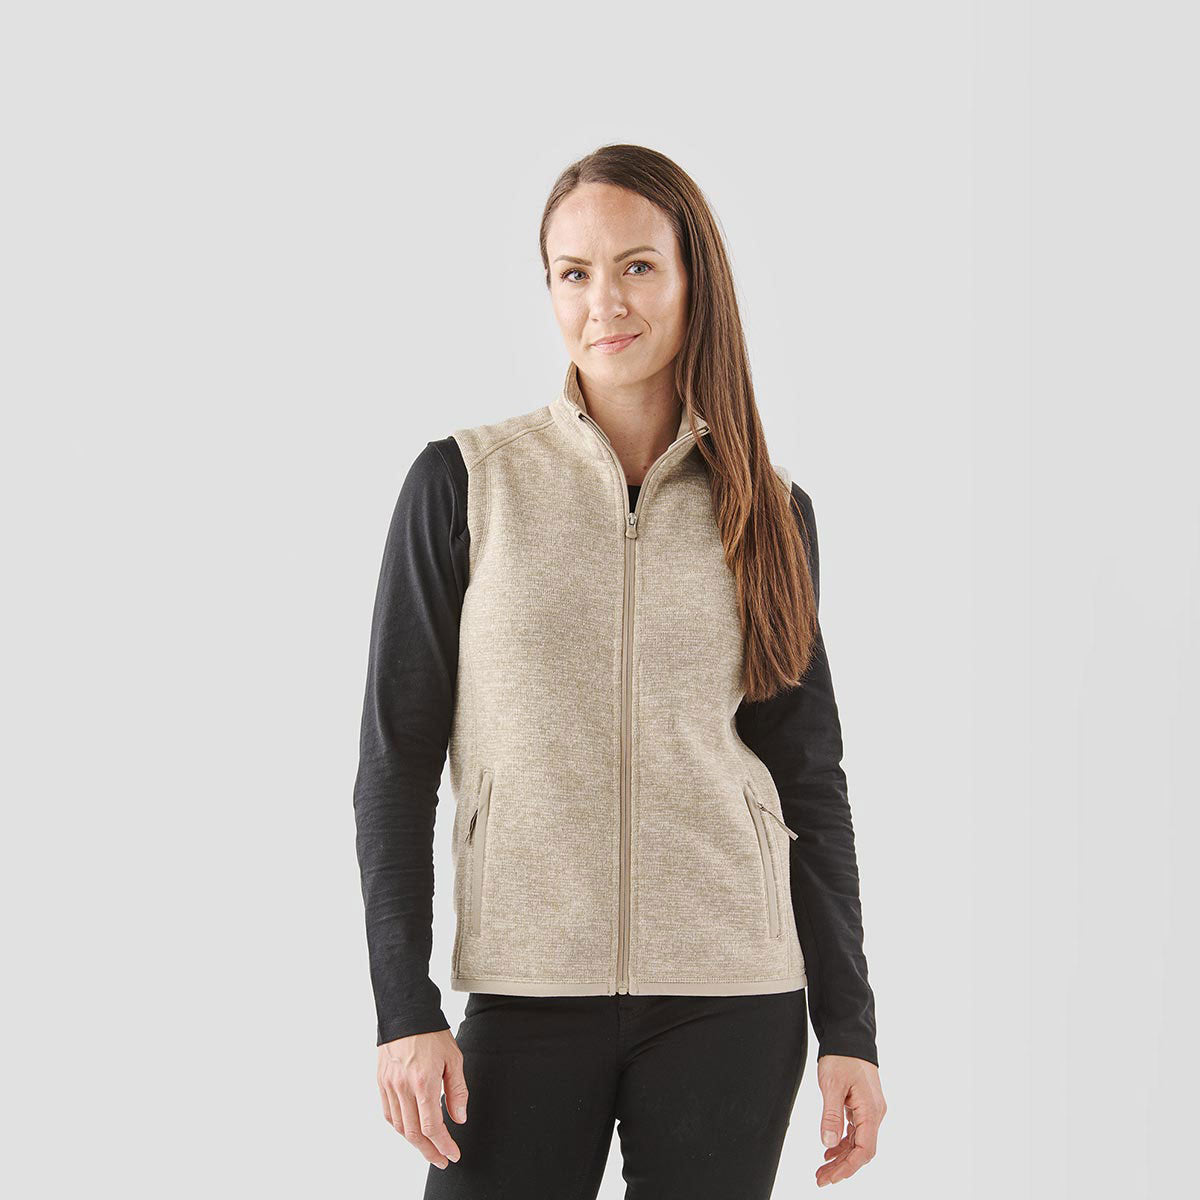 Women's Full Zip Polar Fleece Vest, ST.BLUE XL, 1 Count, 1 Pack